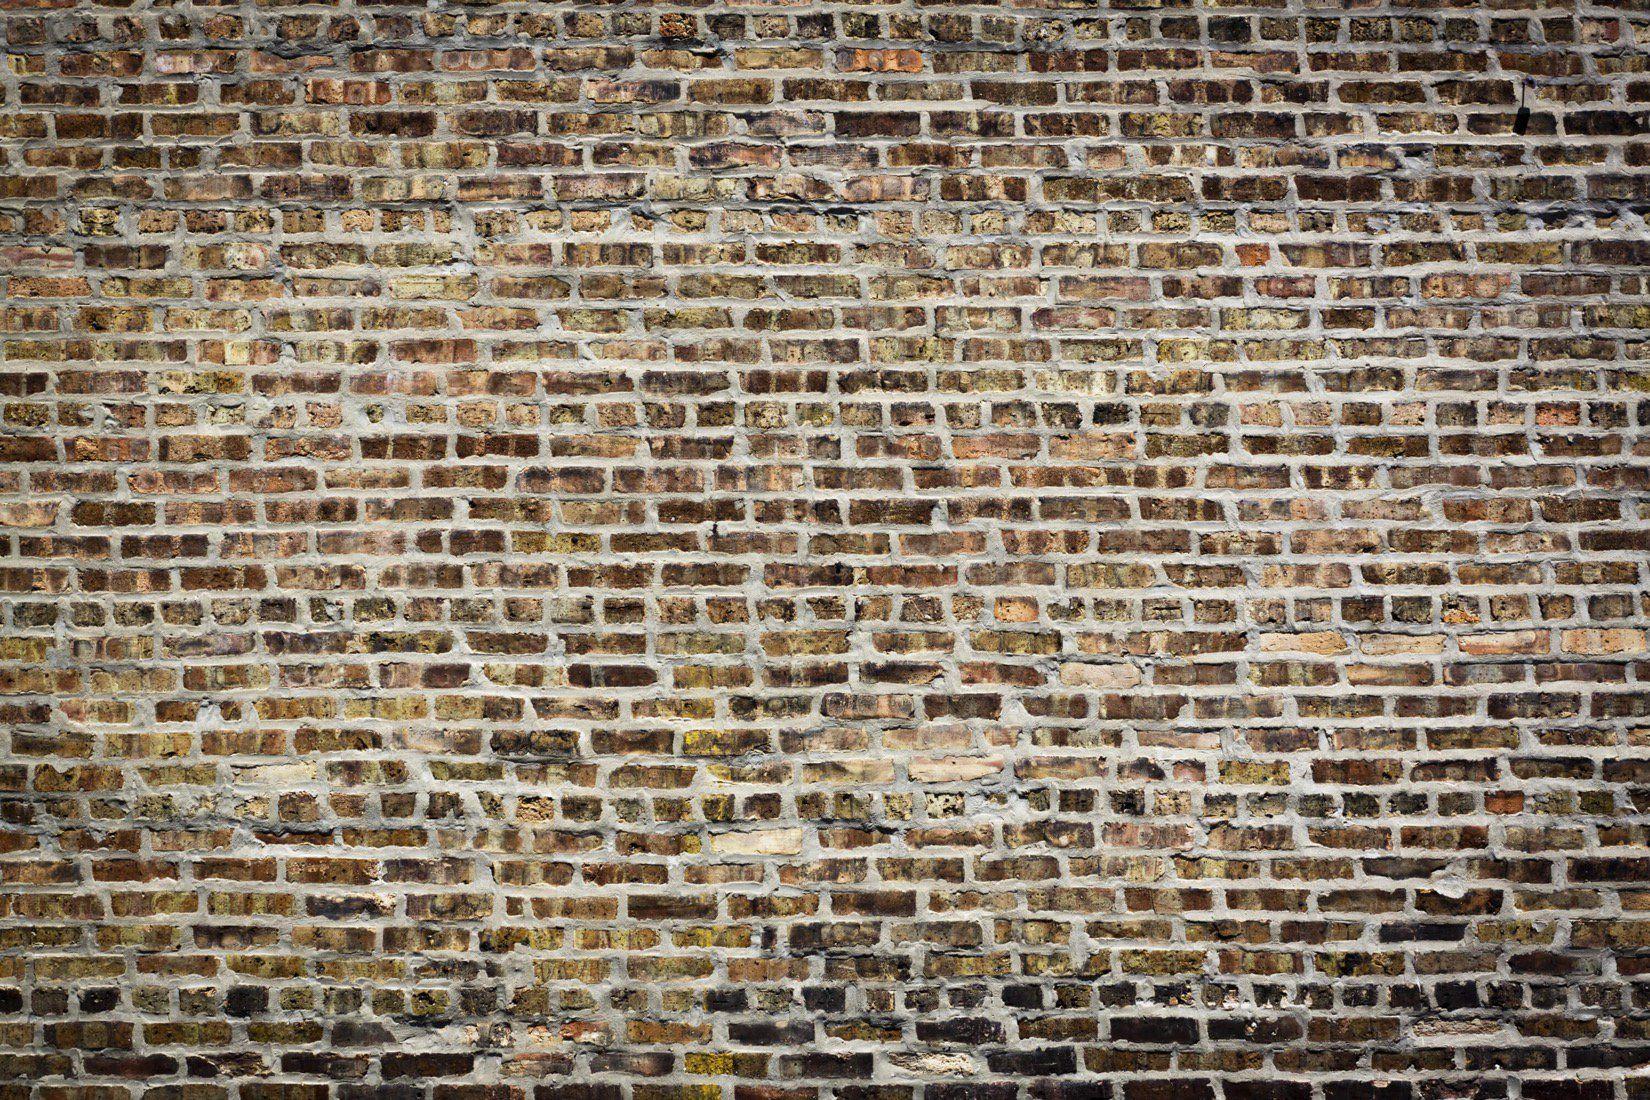 Decaying Brick Wallpaper Wall Mural